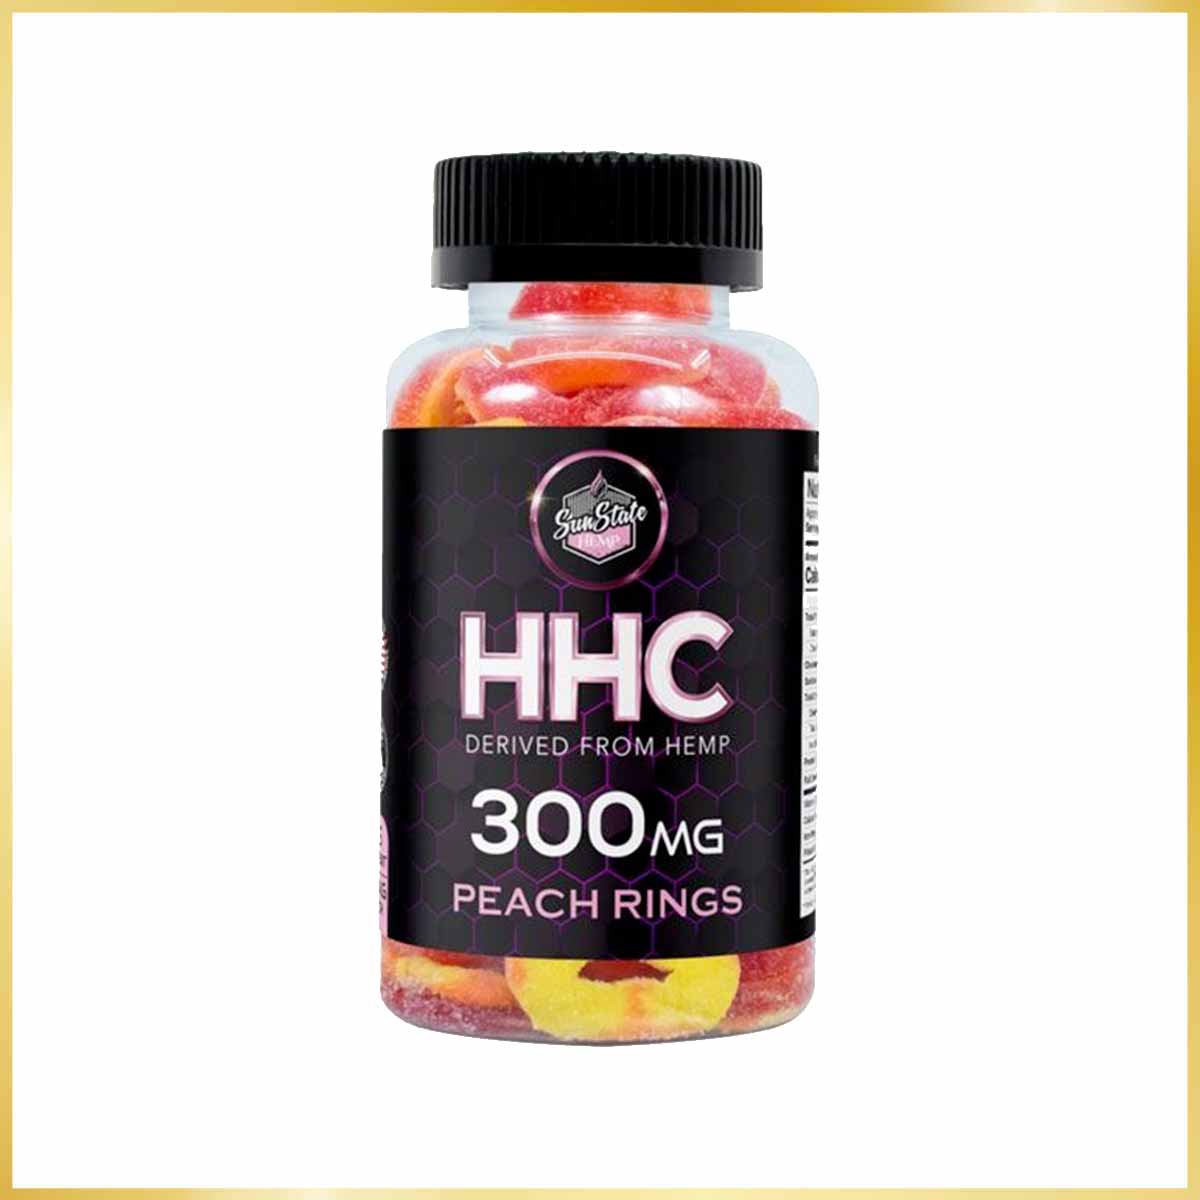 bonbon-hhc-sun-state-hemp-peach-rings